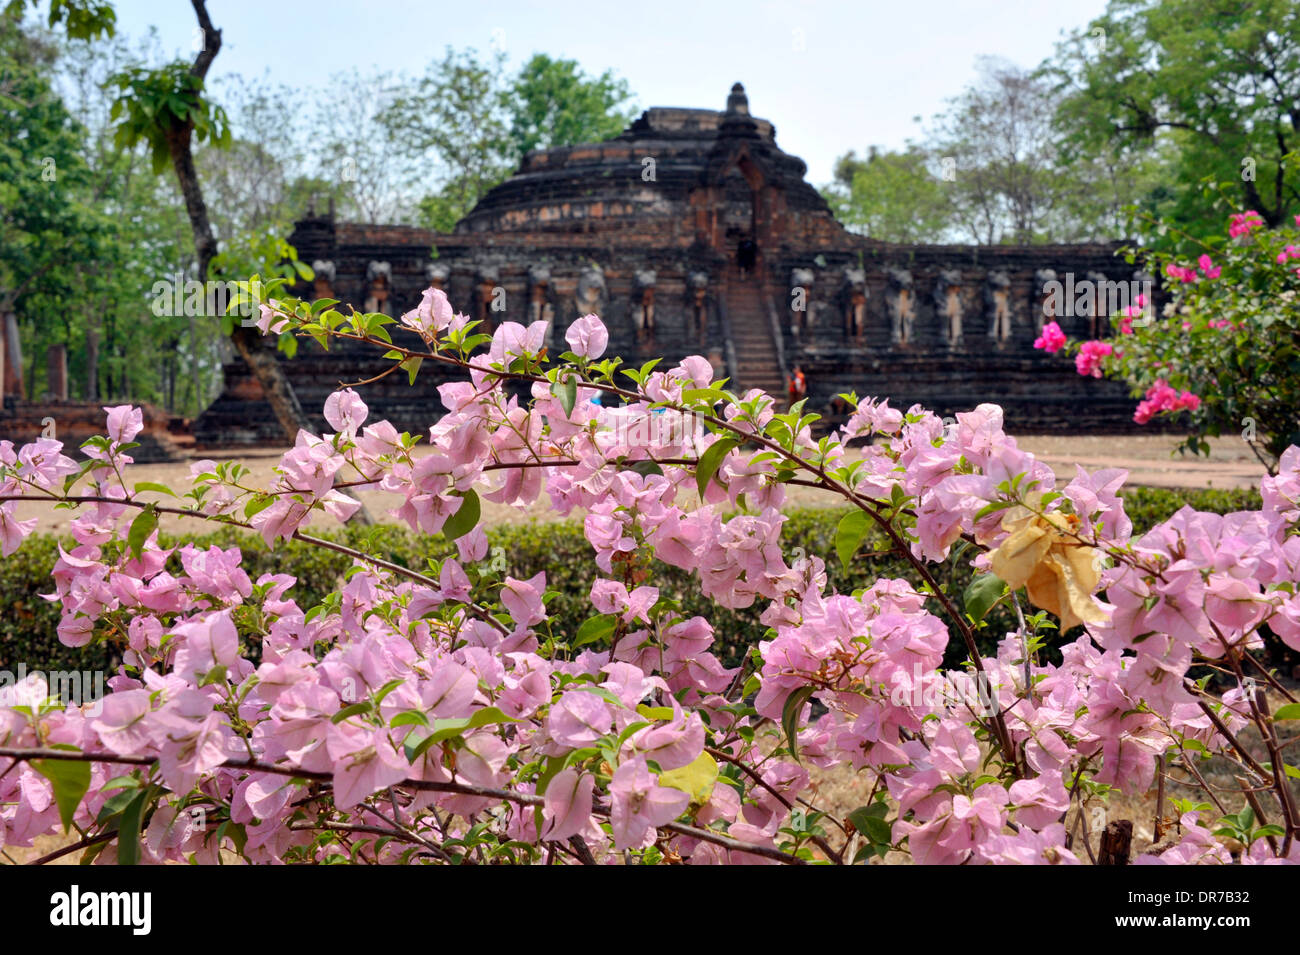 Ancient palace ruins in the historical park at Kamphaeng Phet, Thailand. Stock Photo